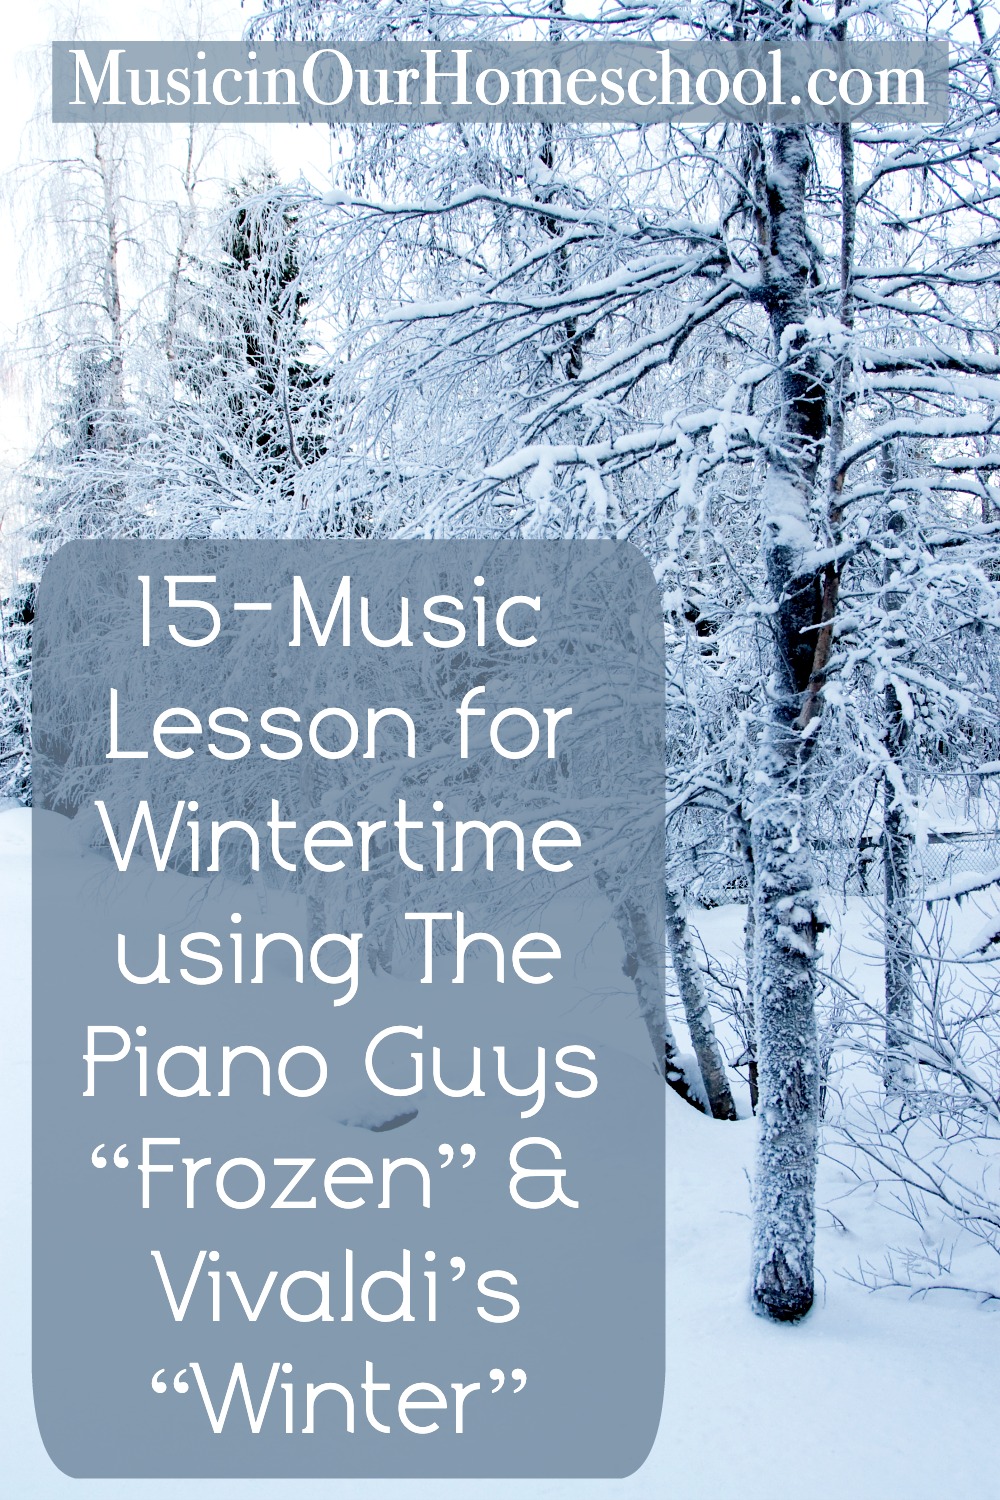 15-Minute Music Lesson for Wintertime using The Piano Guys "Frozen" and Vivaldi's "Winter"